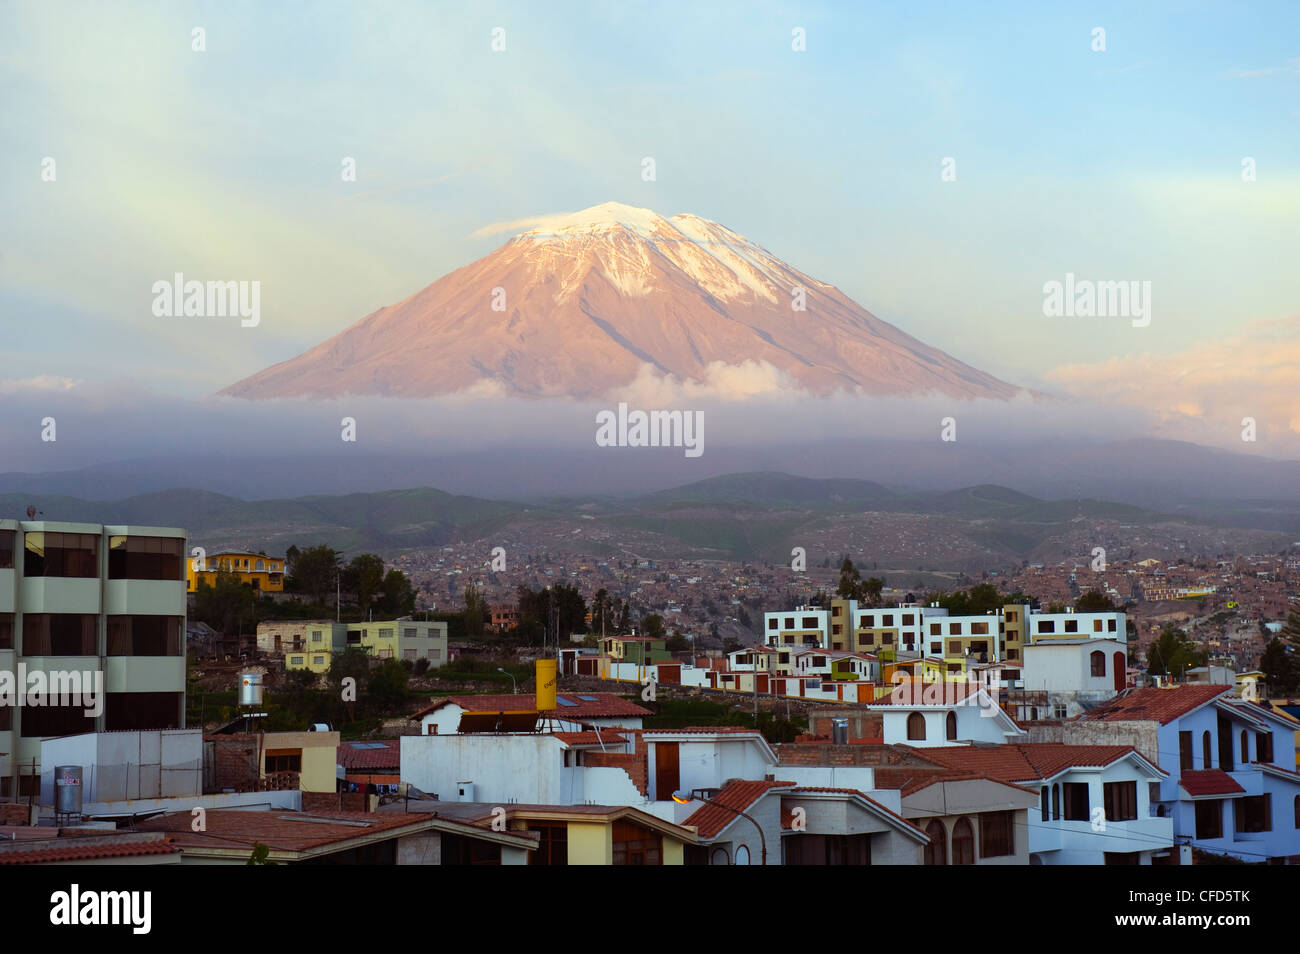 El Misti volcano 5822m,city, Arequipa, Peru, South America Stock Photo